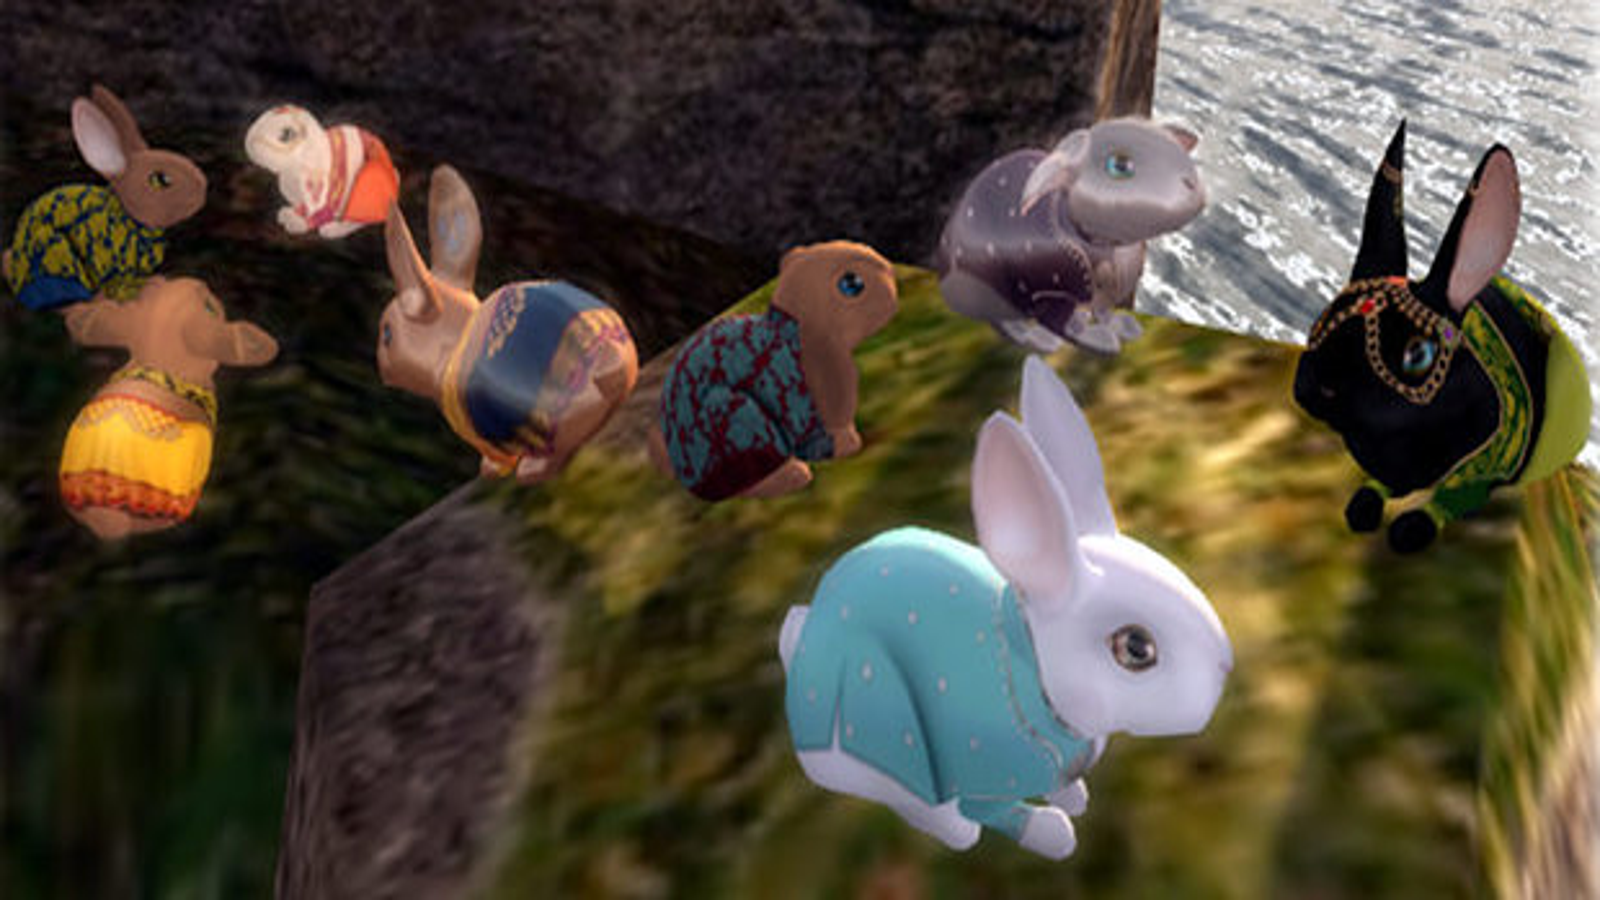 Gamer [2009] - Rabbit Reviews